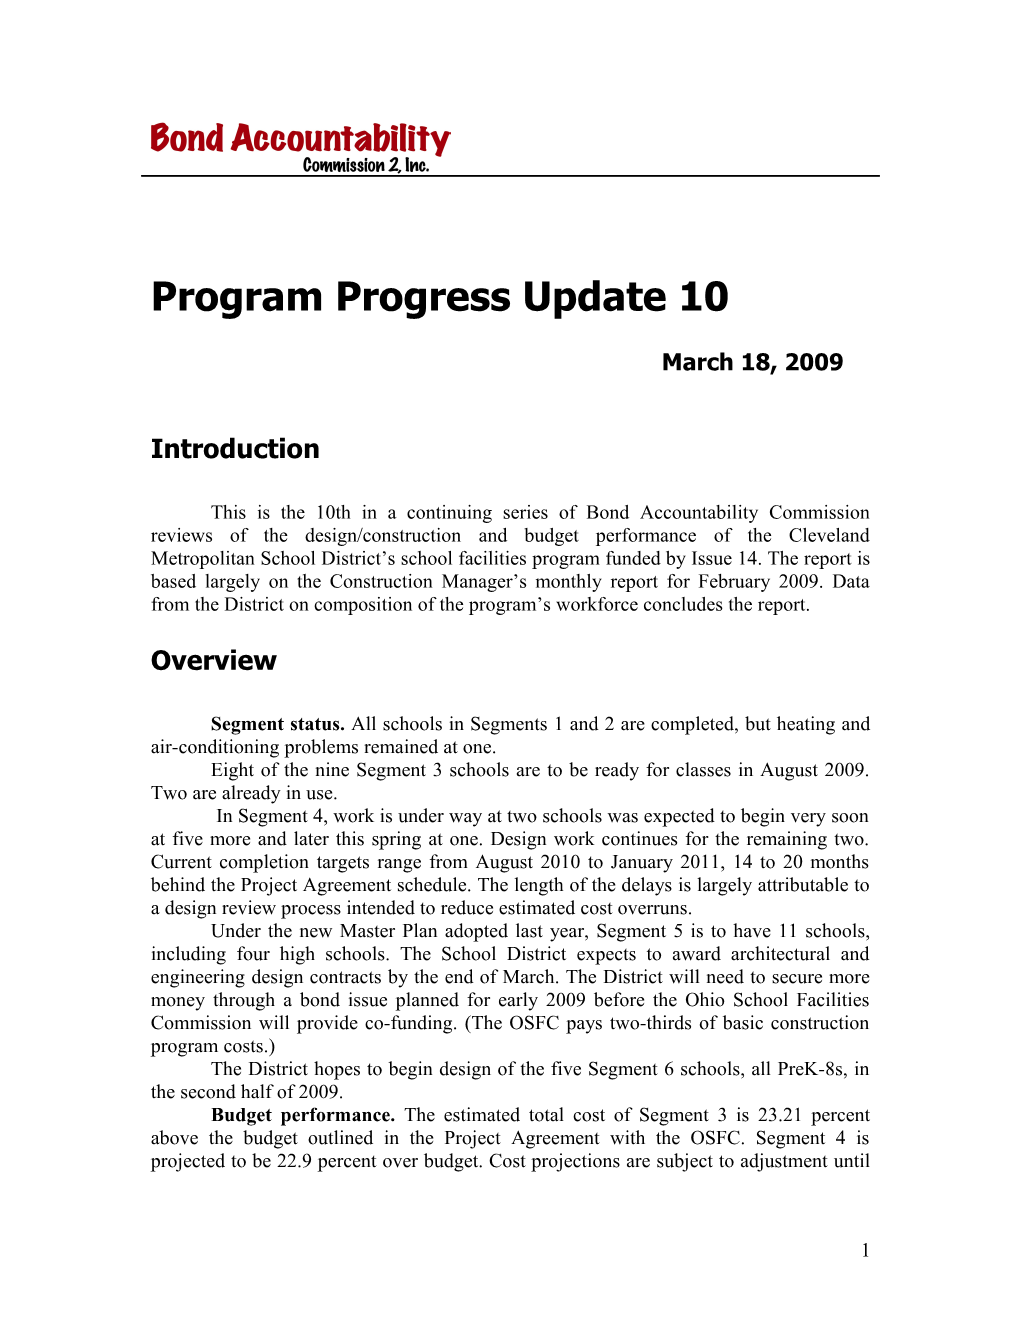 Program Progress Update10